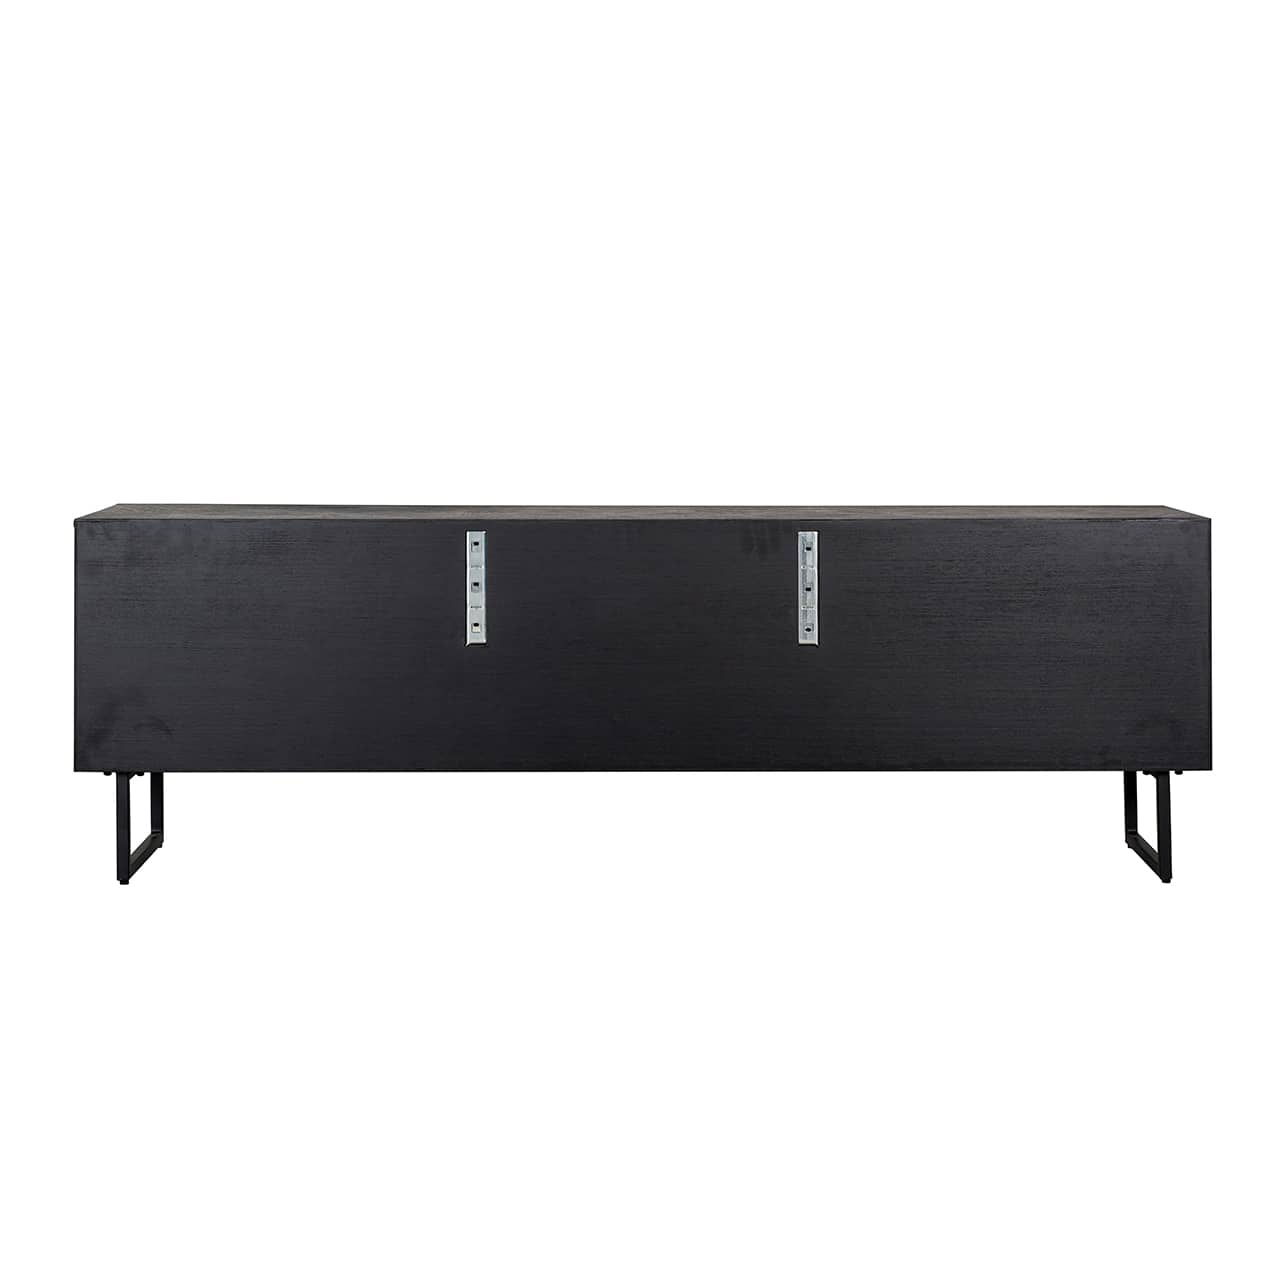 TV-unit Blax 2-flap doors 1-shelf (Black)